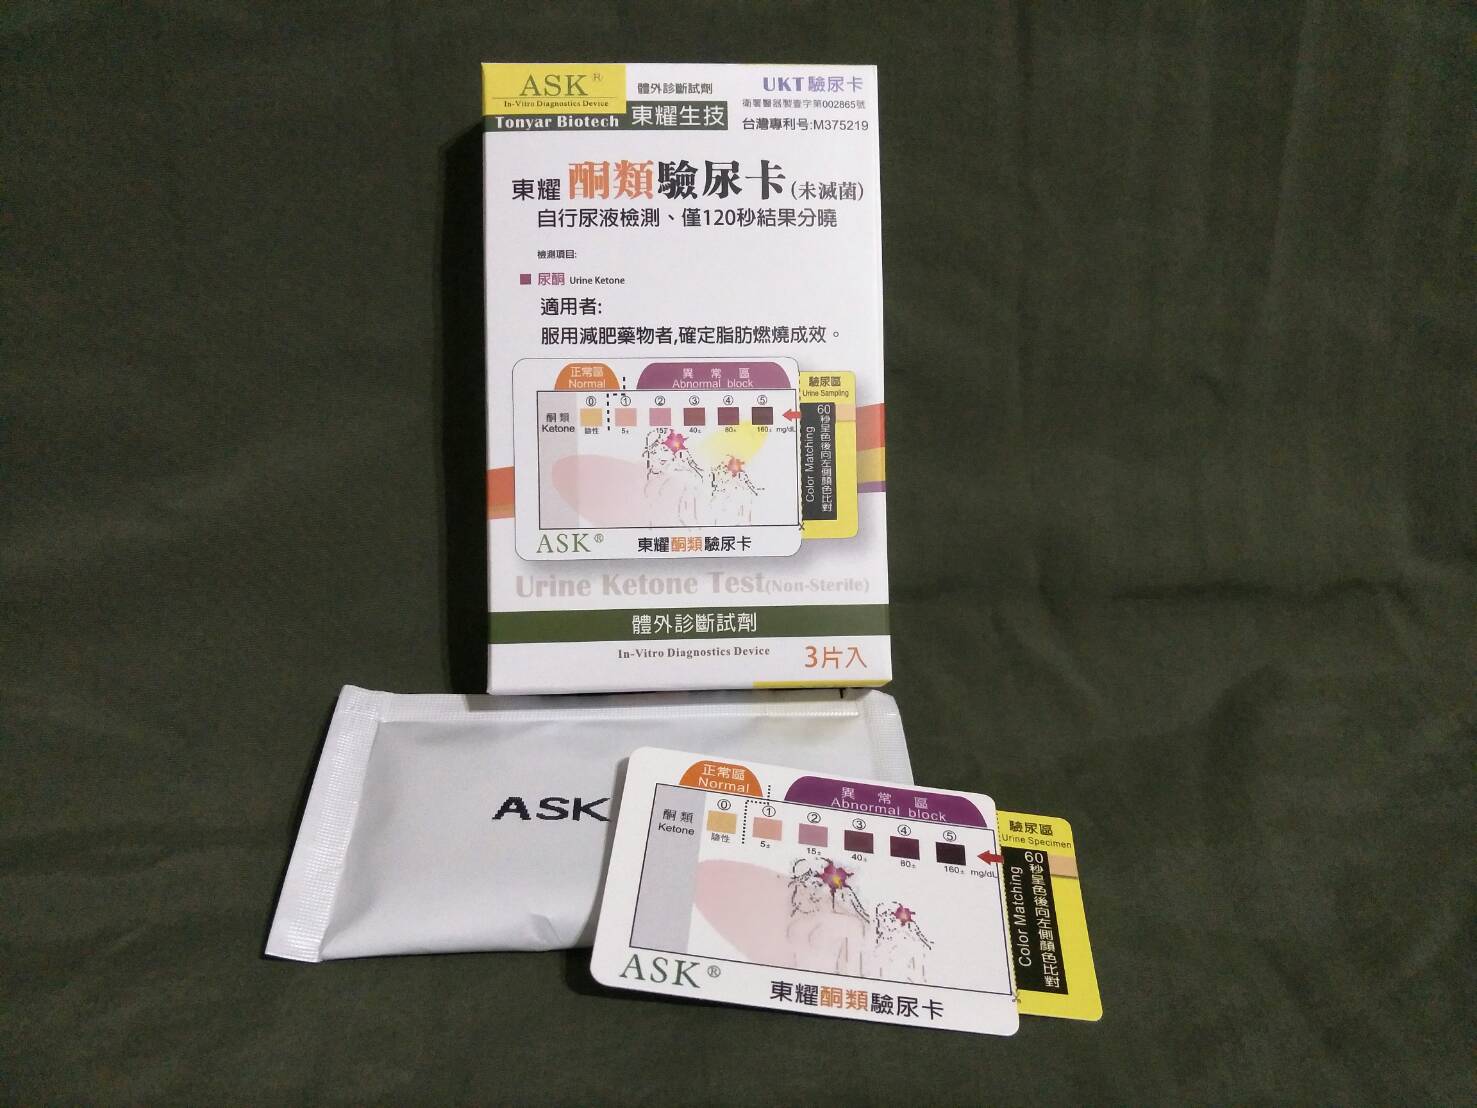 ASK® Urine Ketone Test (UKT)(Non-Sterile)